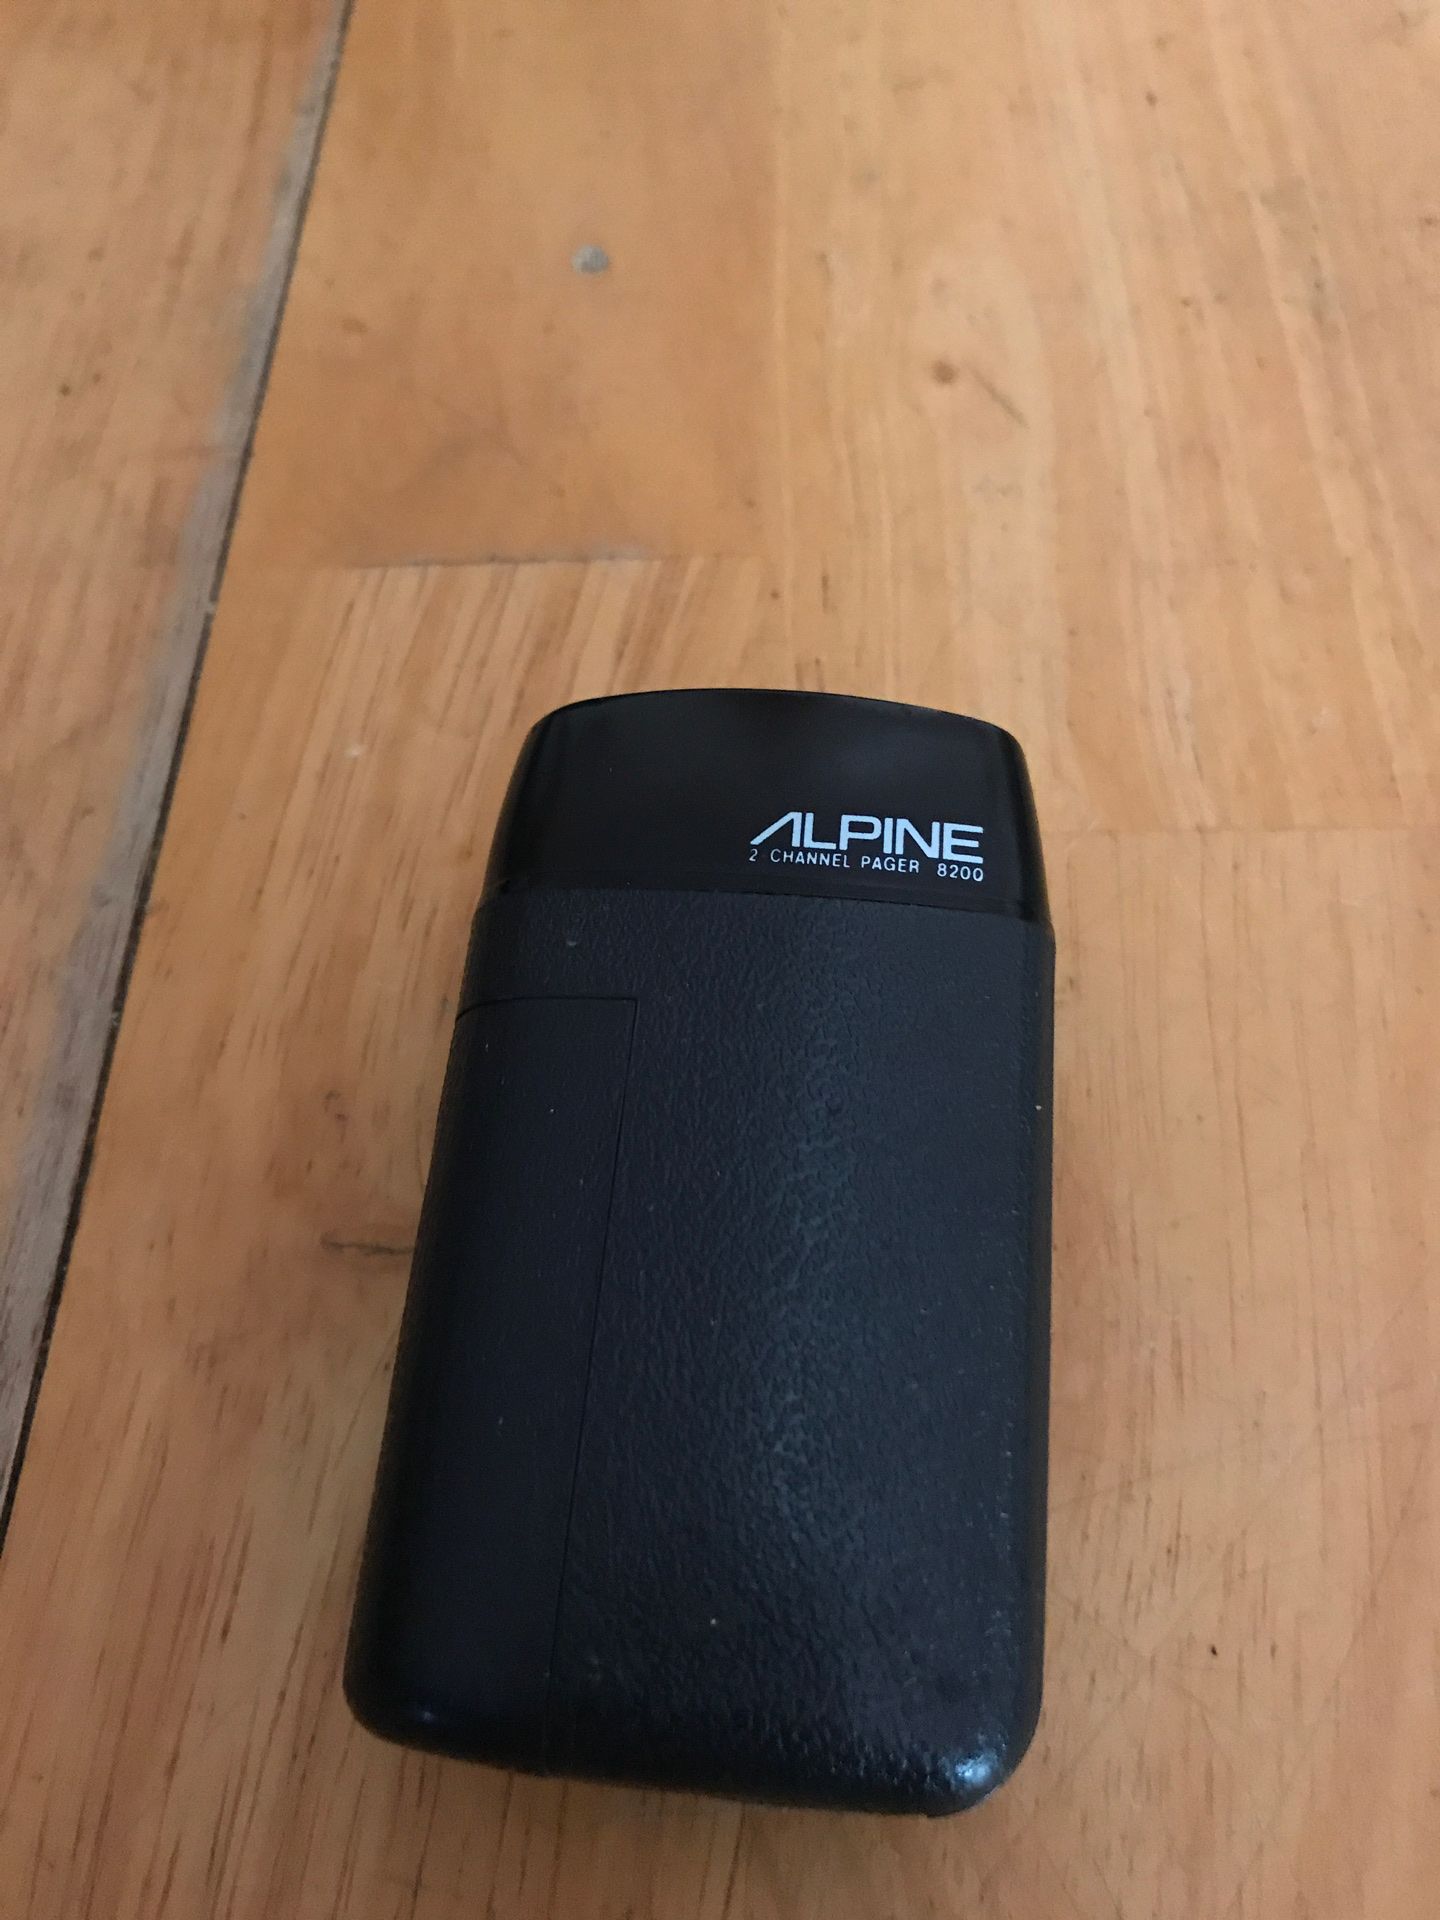 Alpine remote pager receiver model # 8200